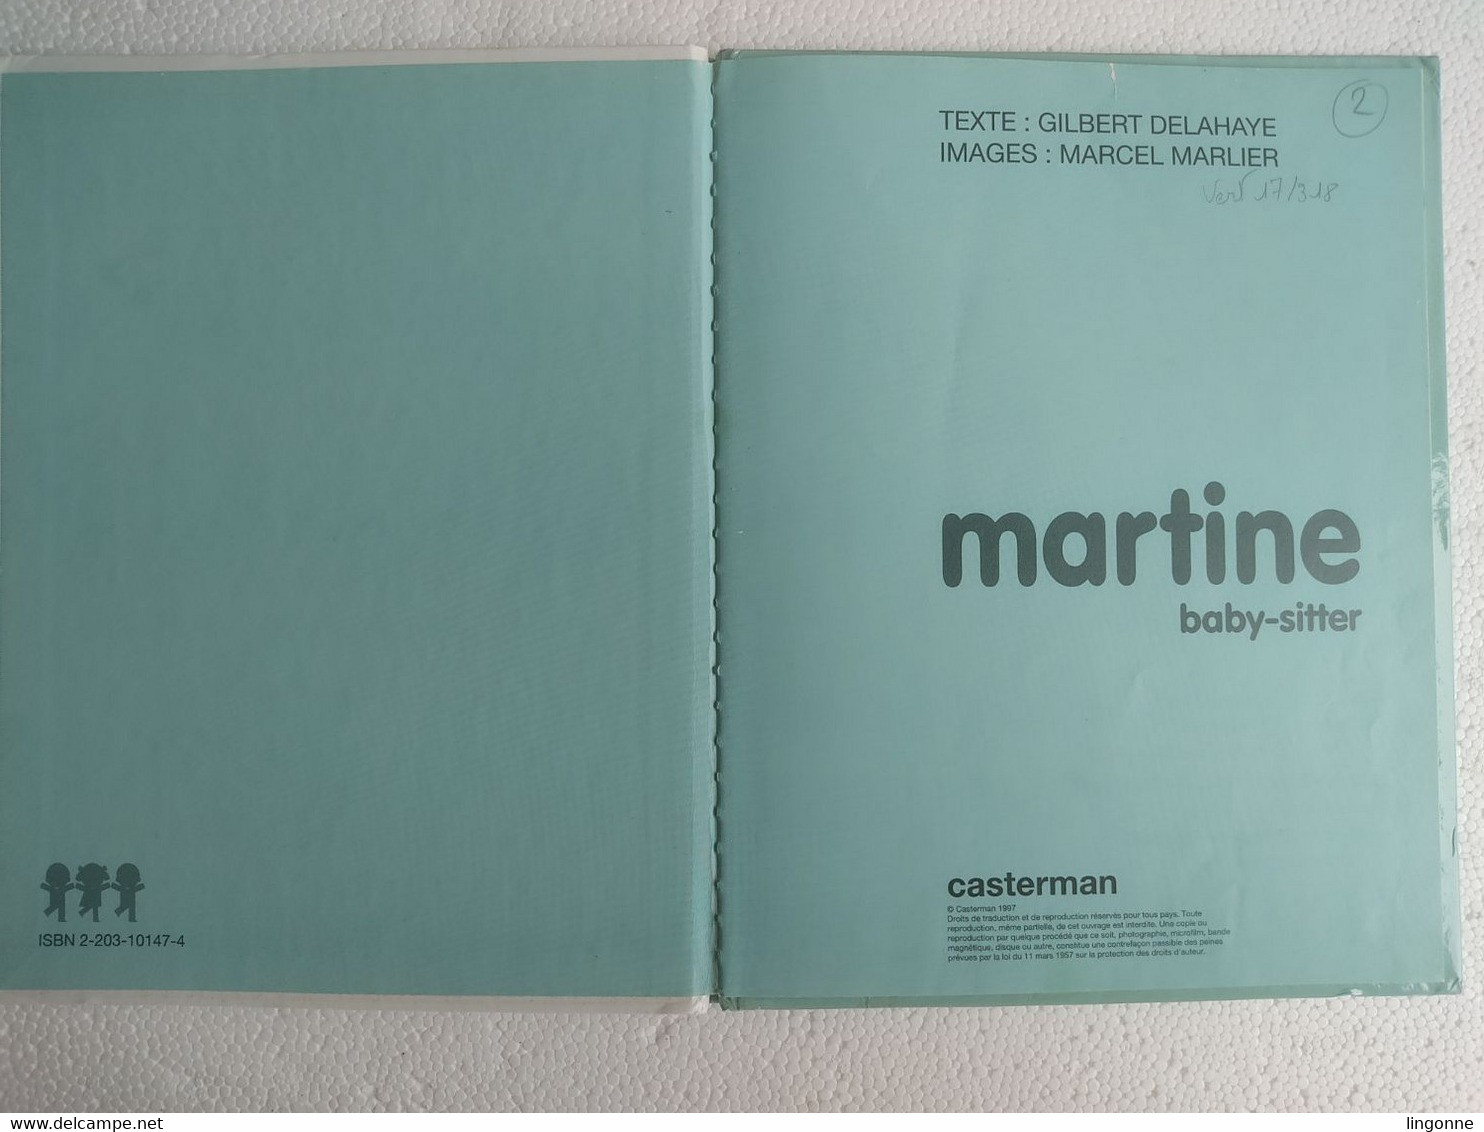 Martine Baby-sitter - CASTERMAN 1997 - Casterman